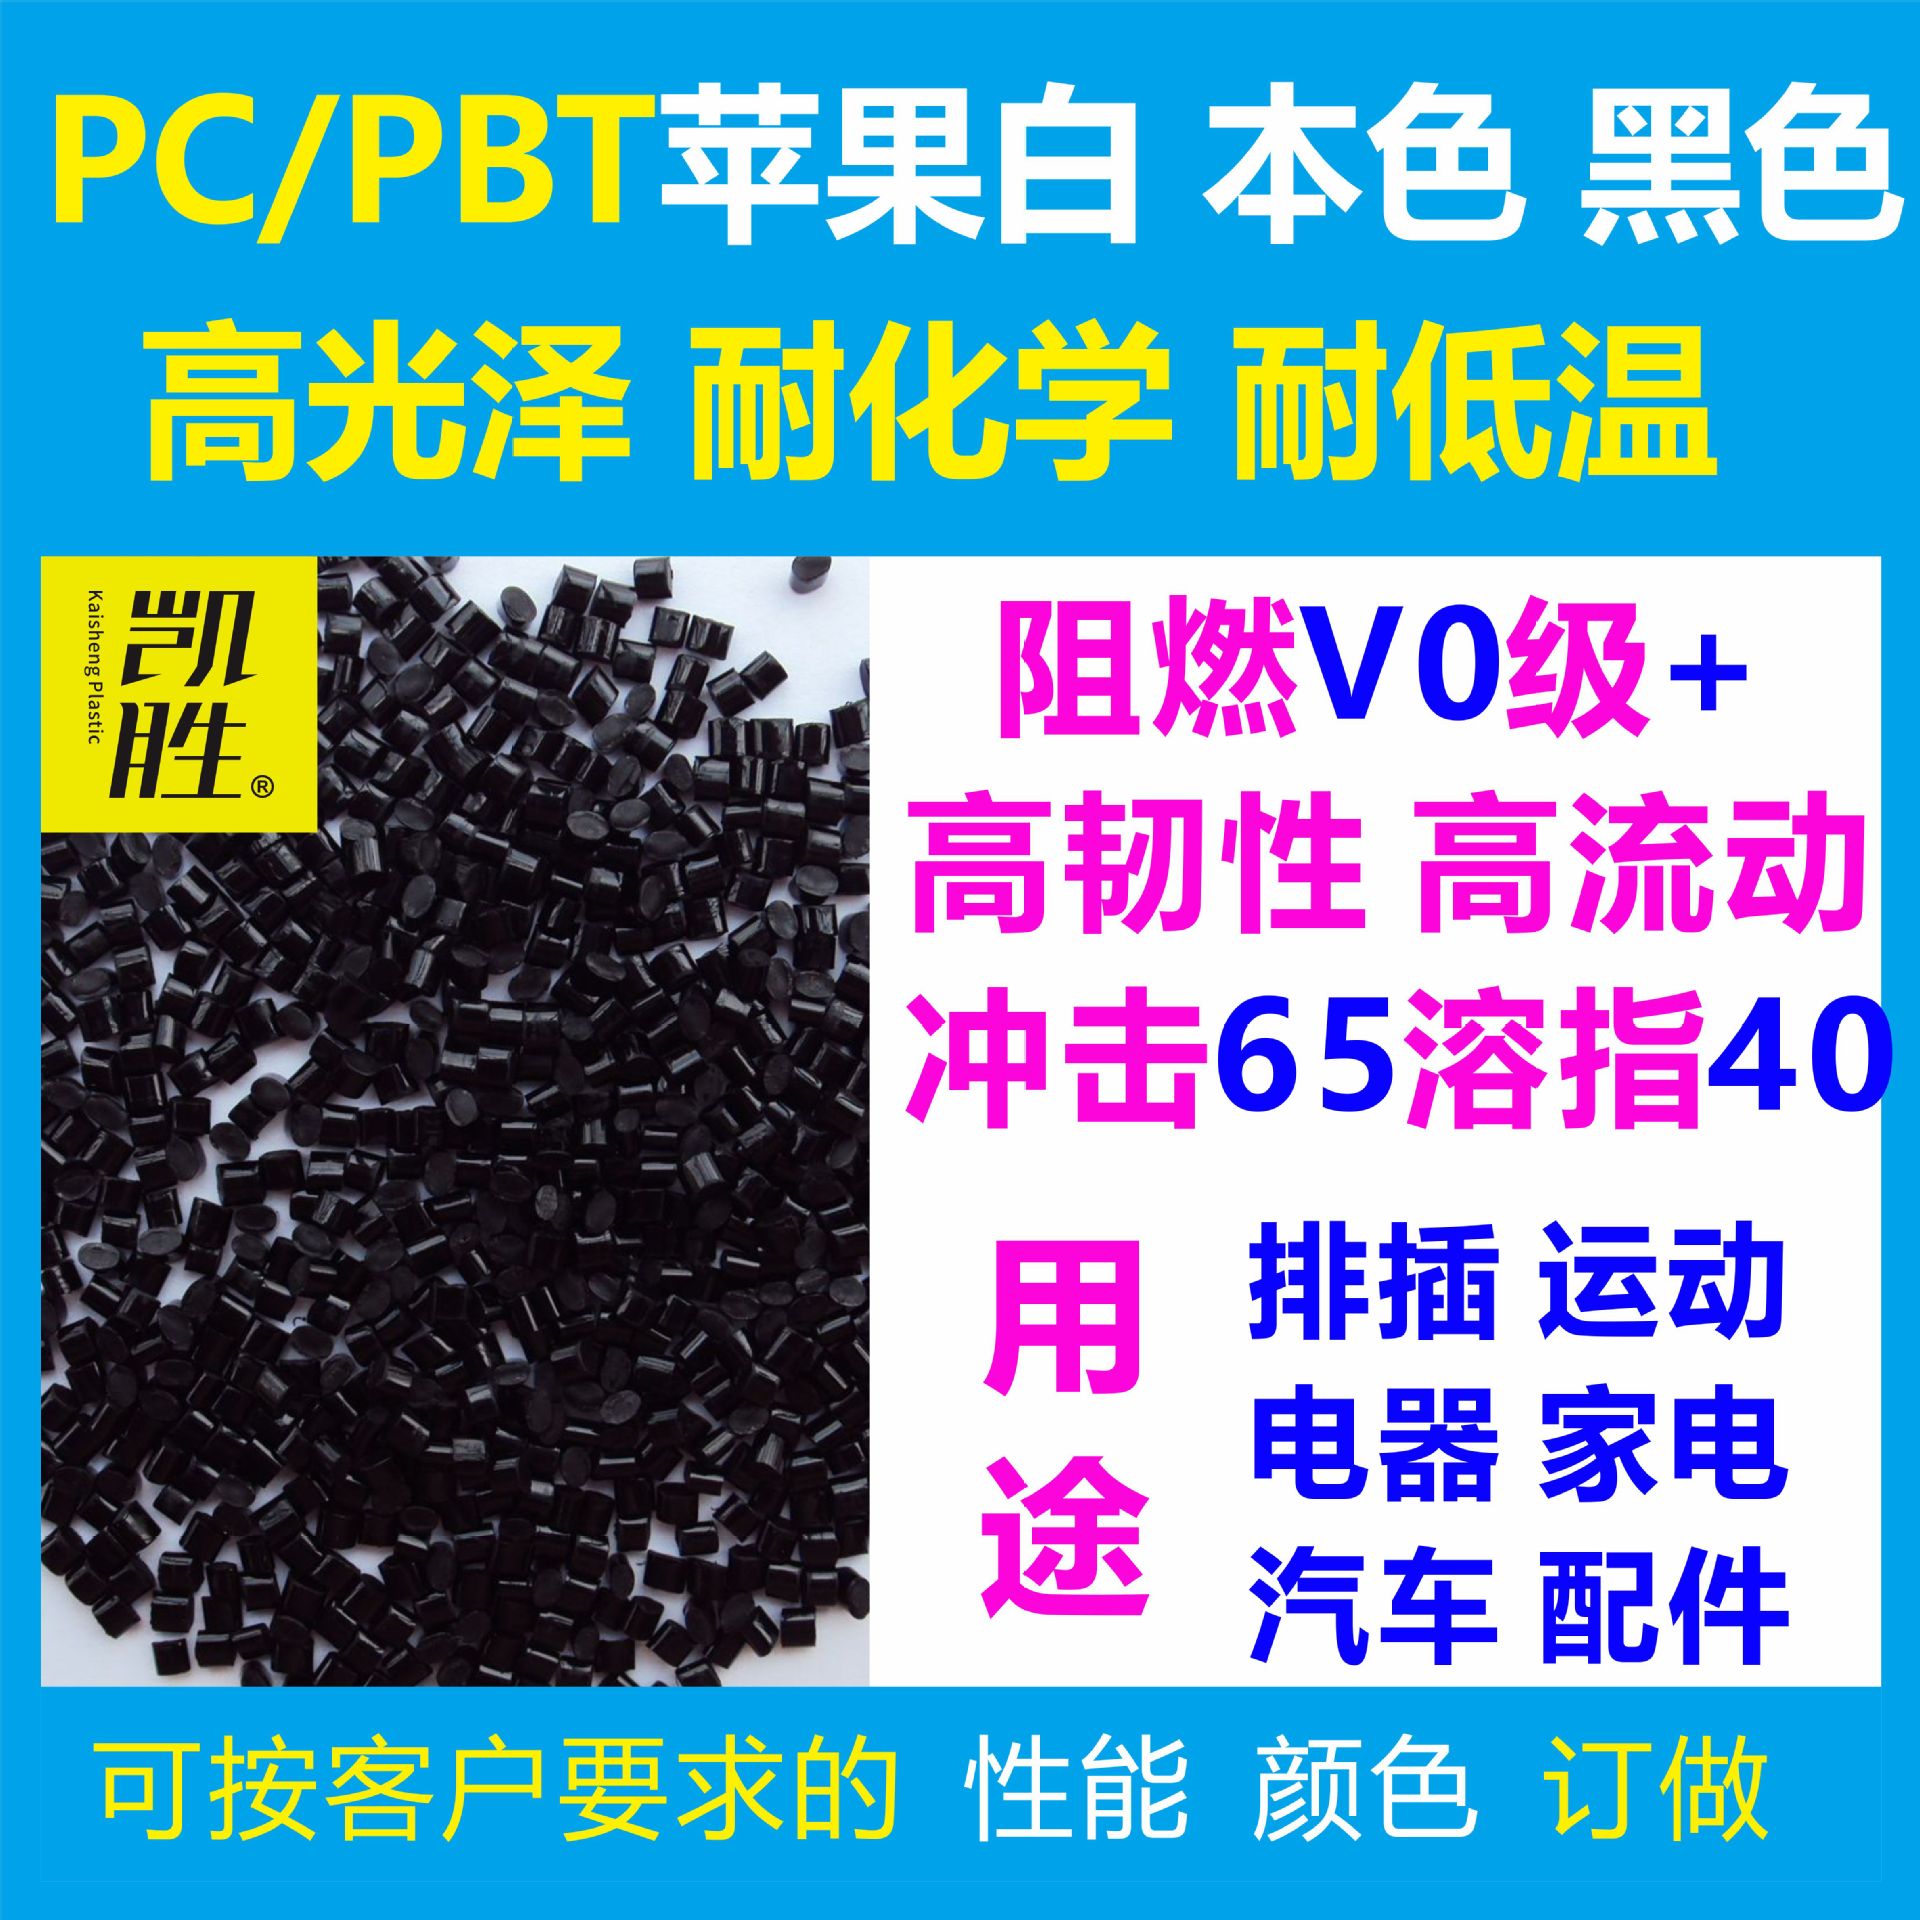 pcpbt阻燃级塑胶料黑耐化学耐低温高流动高韧韧pc pbt防火级塑料|ms